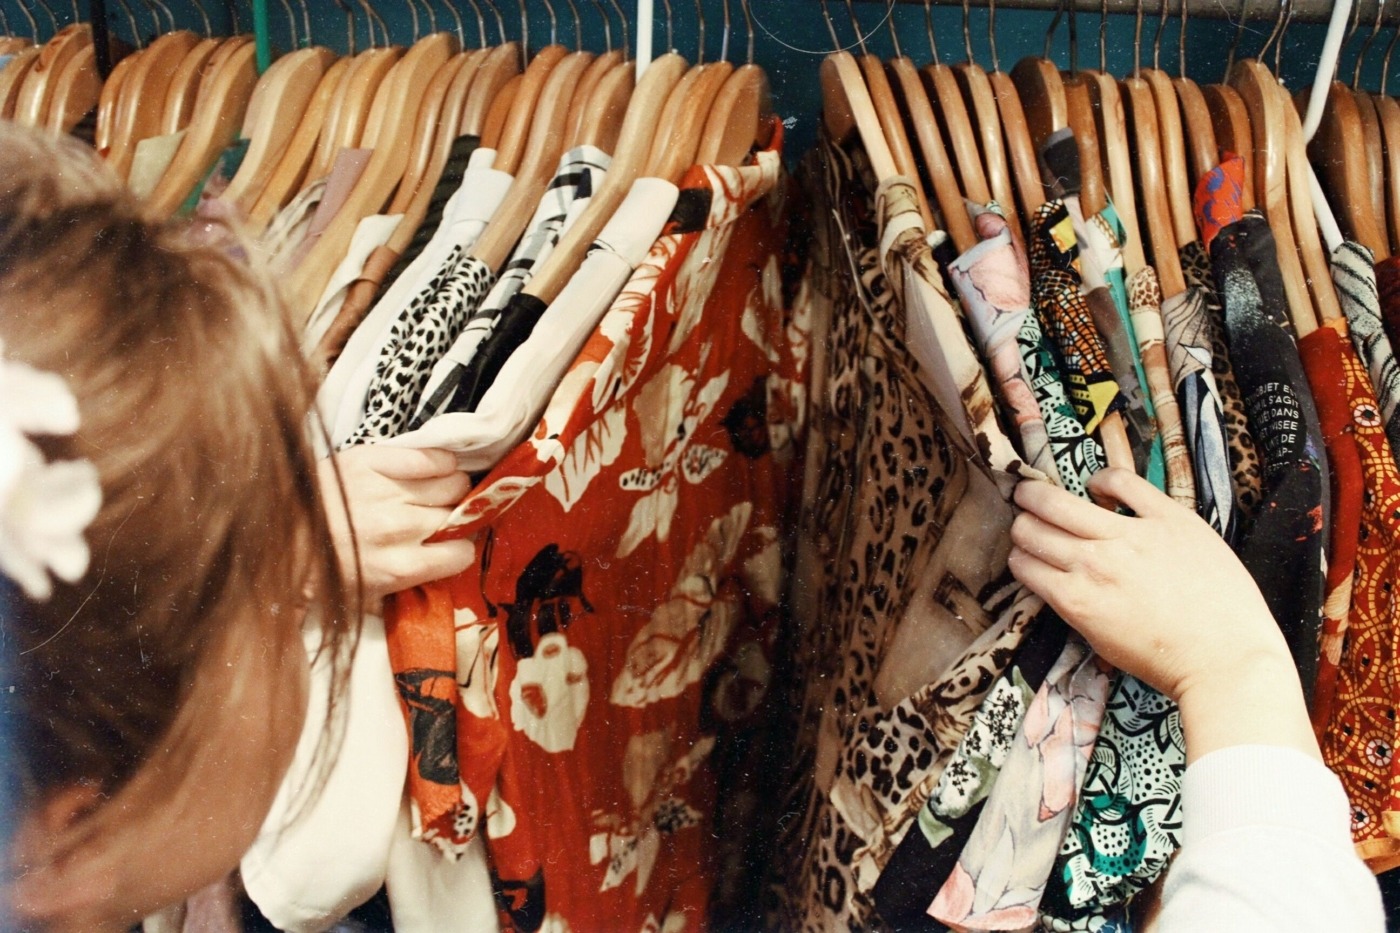 Lady browsing through shirts on a rack